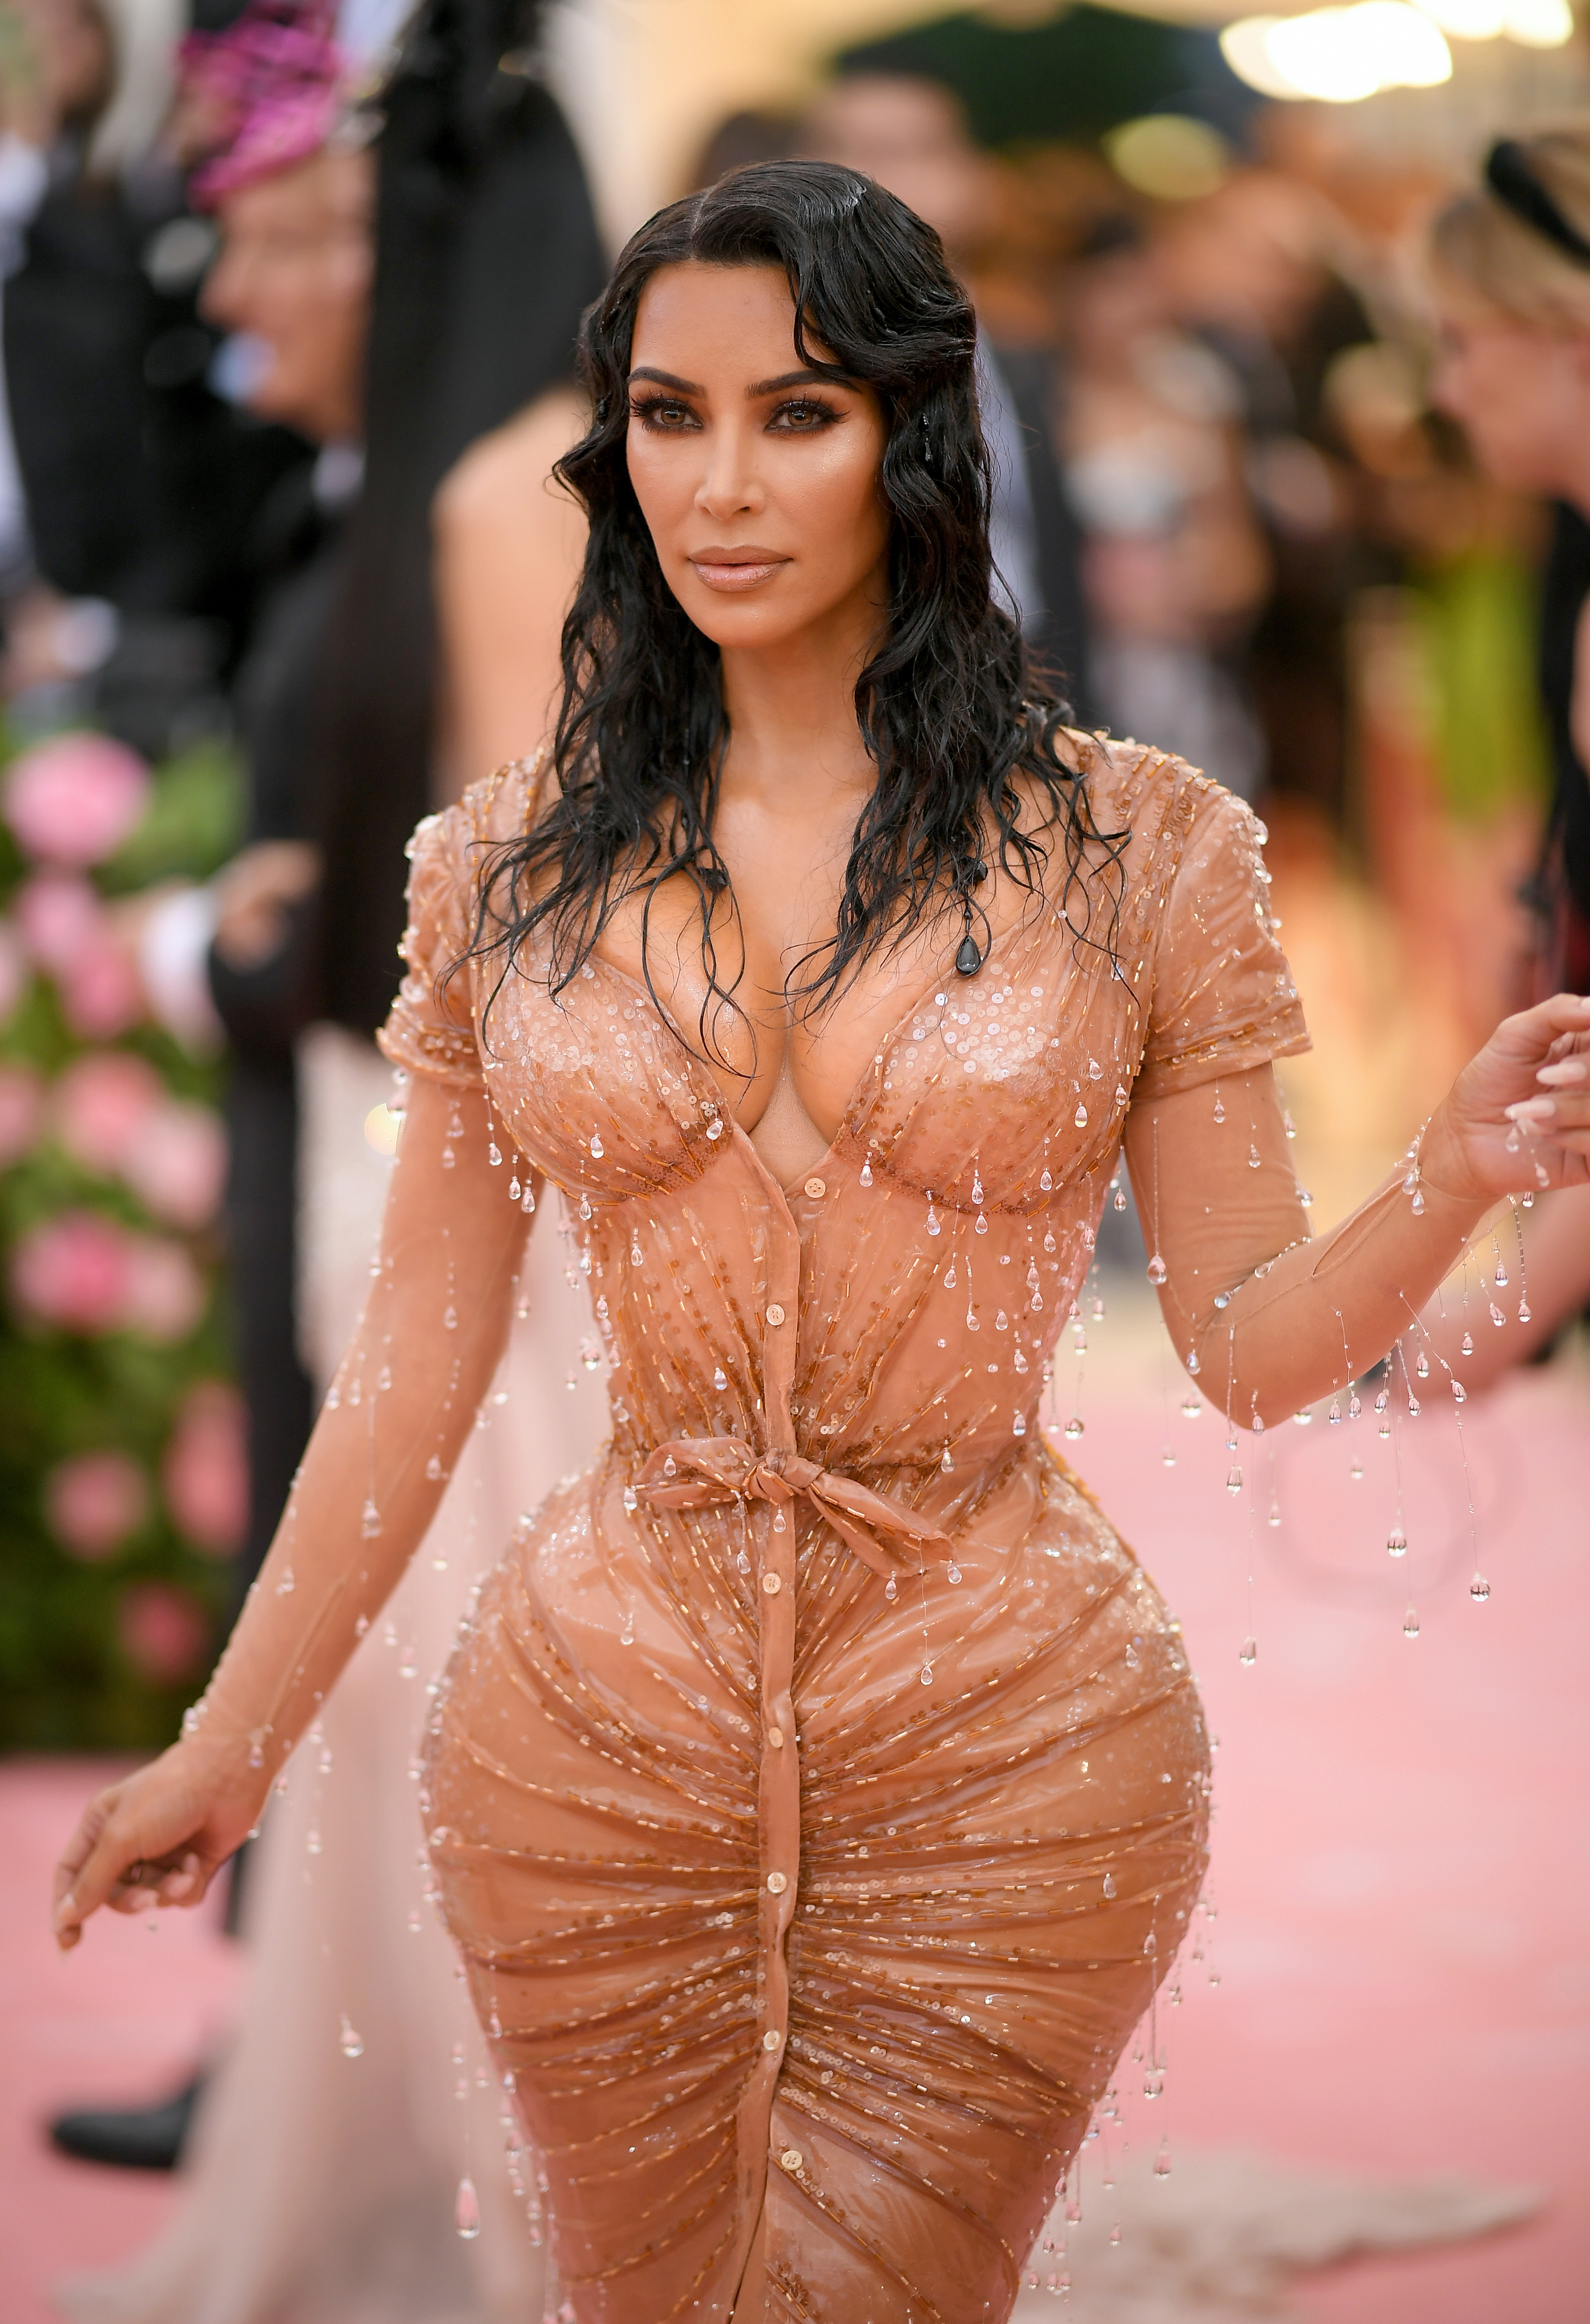 Kim Kardashian in a beaded, figure-hugging dress at an event